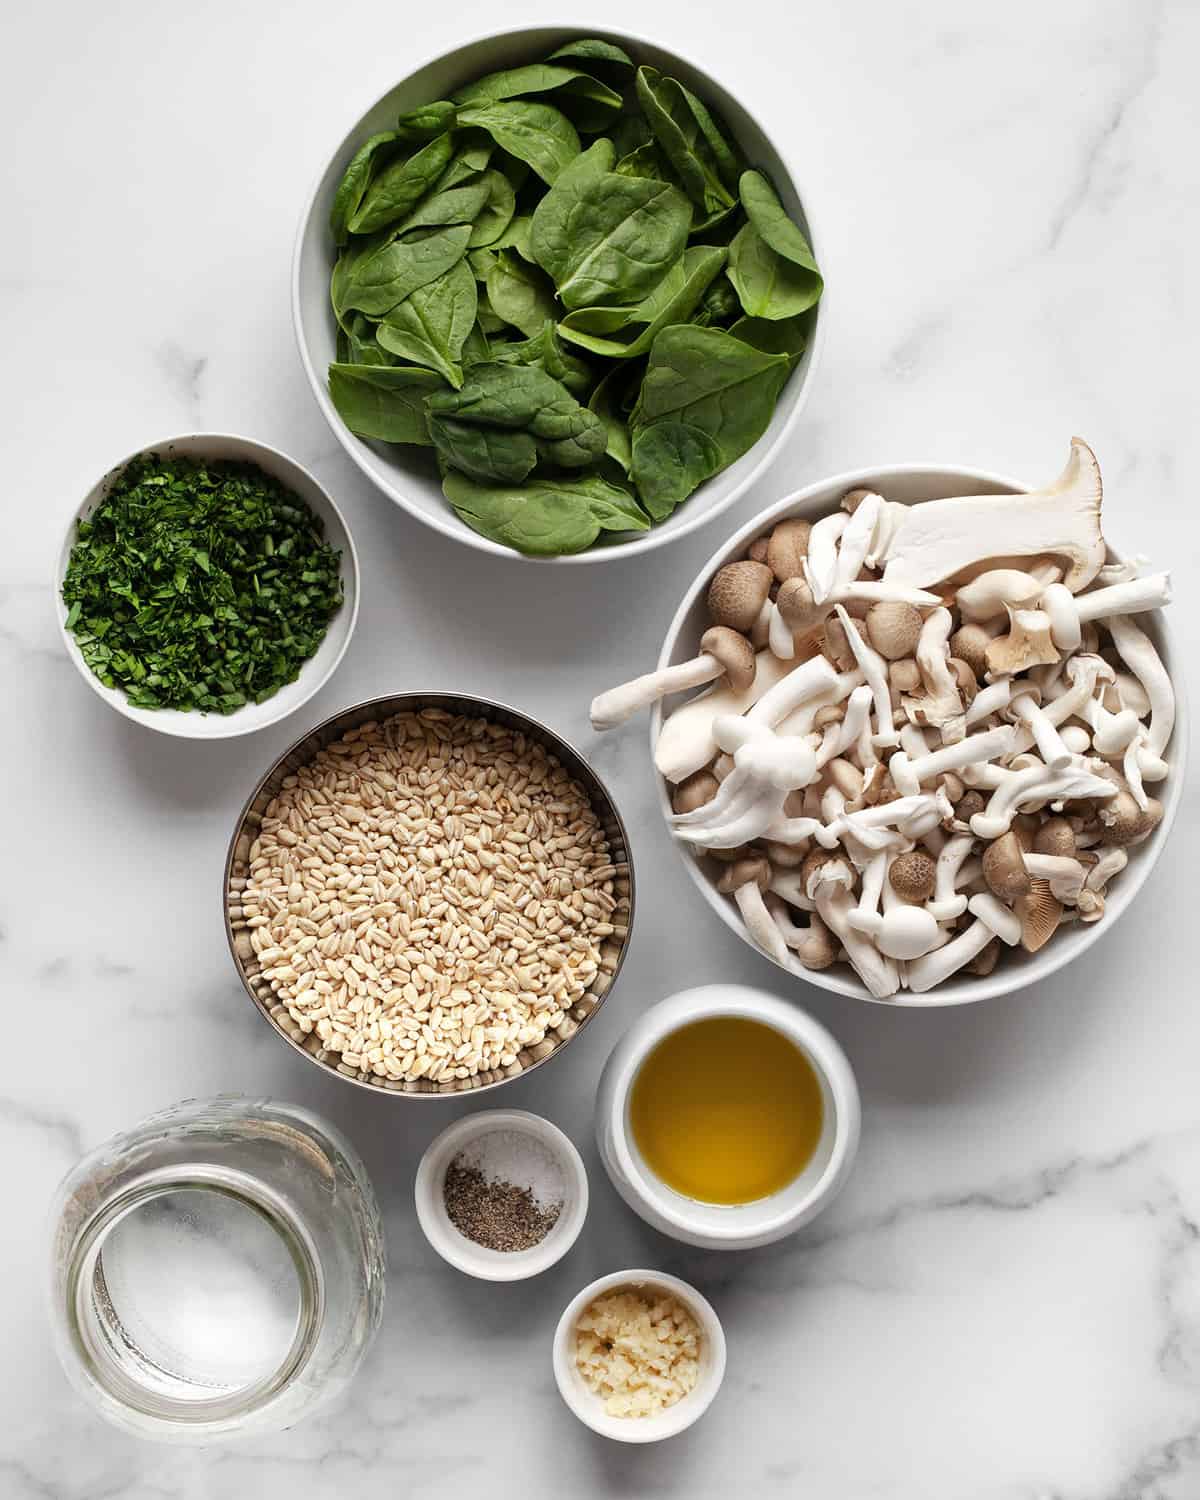 Ingredients including barley, mushrooms, spinach, herbs, olive oil, garlic, salt, pepper and water.